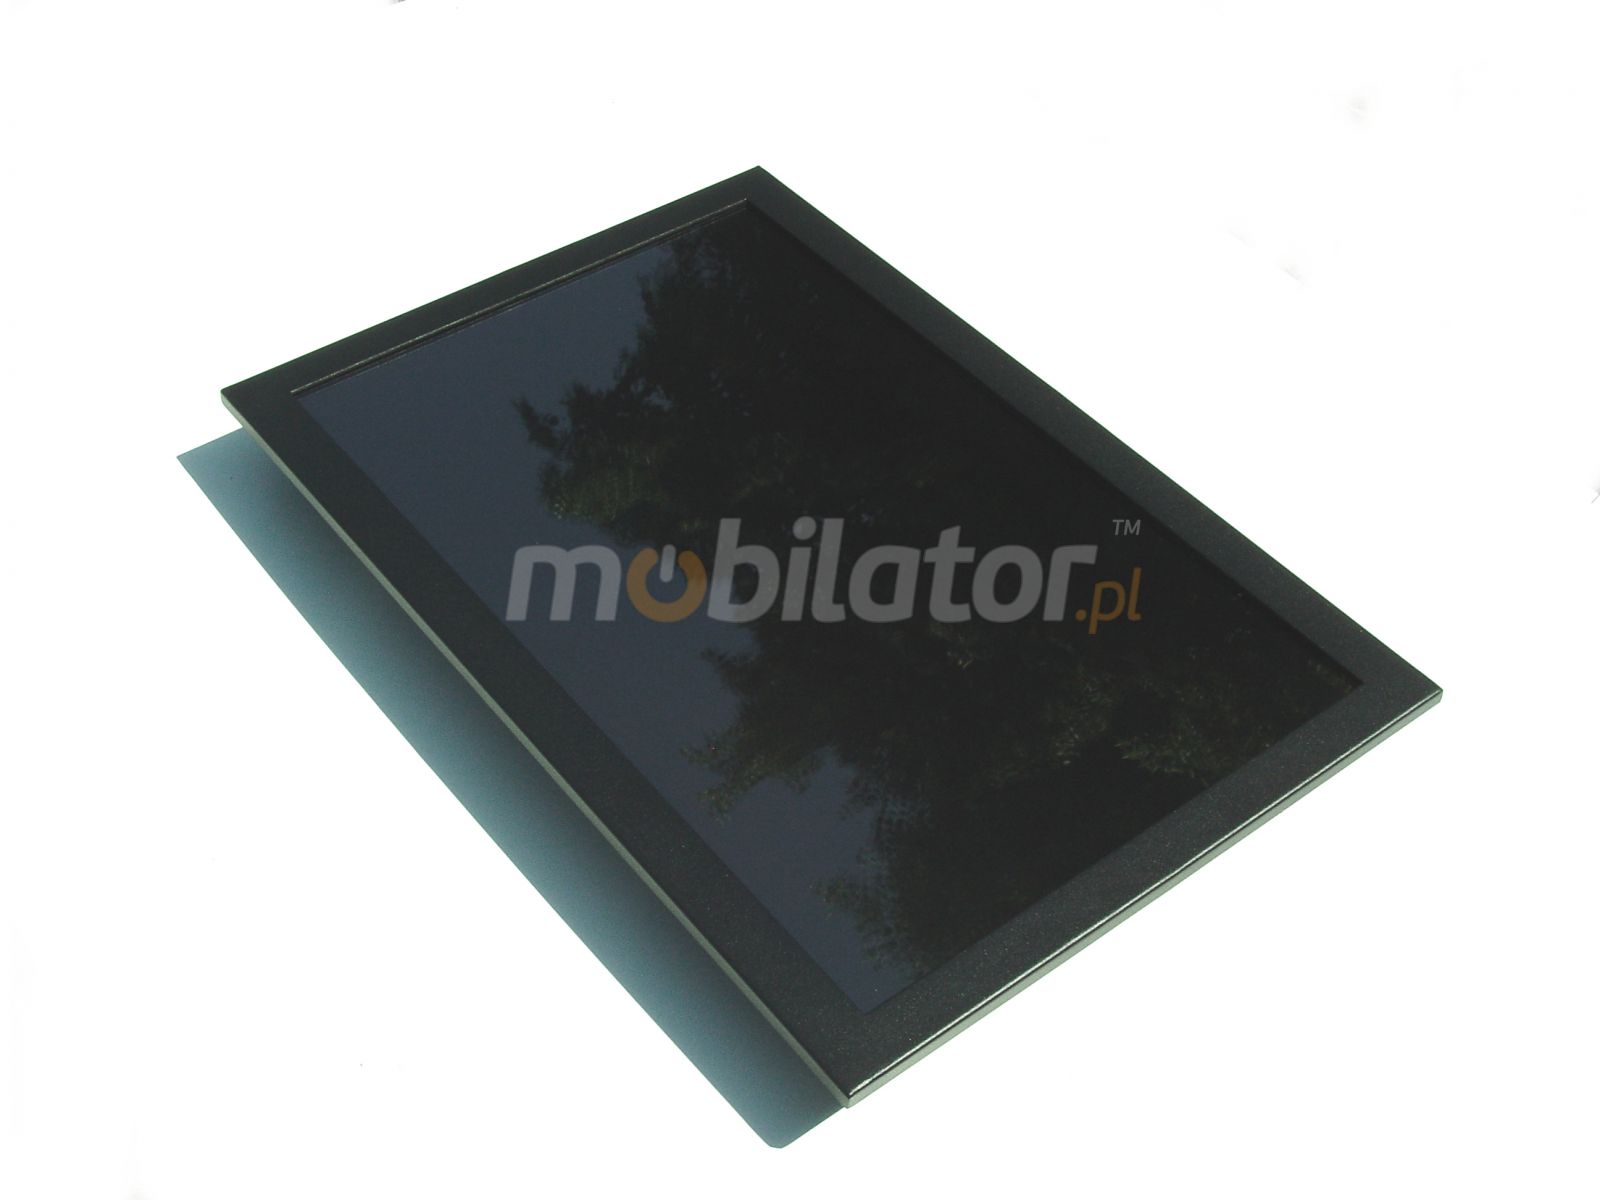 Monitor dotykowy PC  Ekran pojemnociowy capacitive wywietlacz 22 cali LED mobilator.pl New Portable Devices VGA HDMI